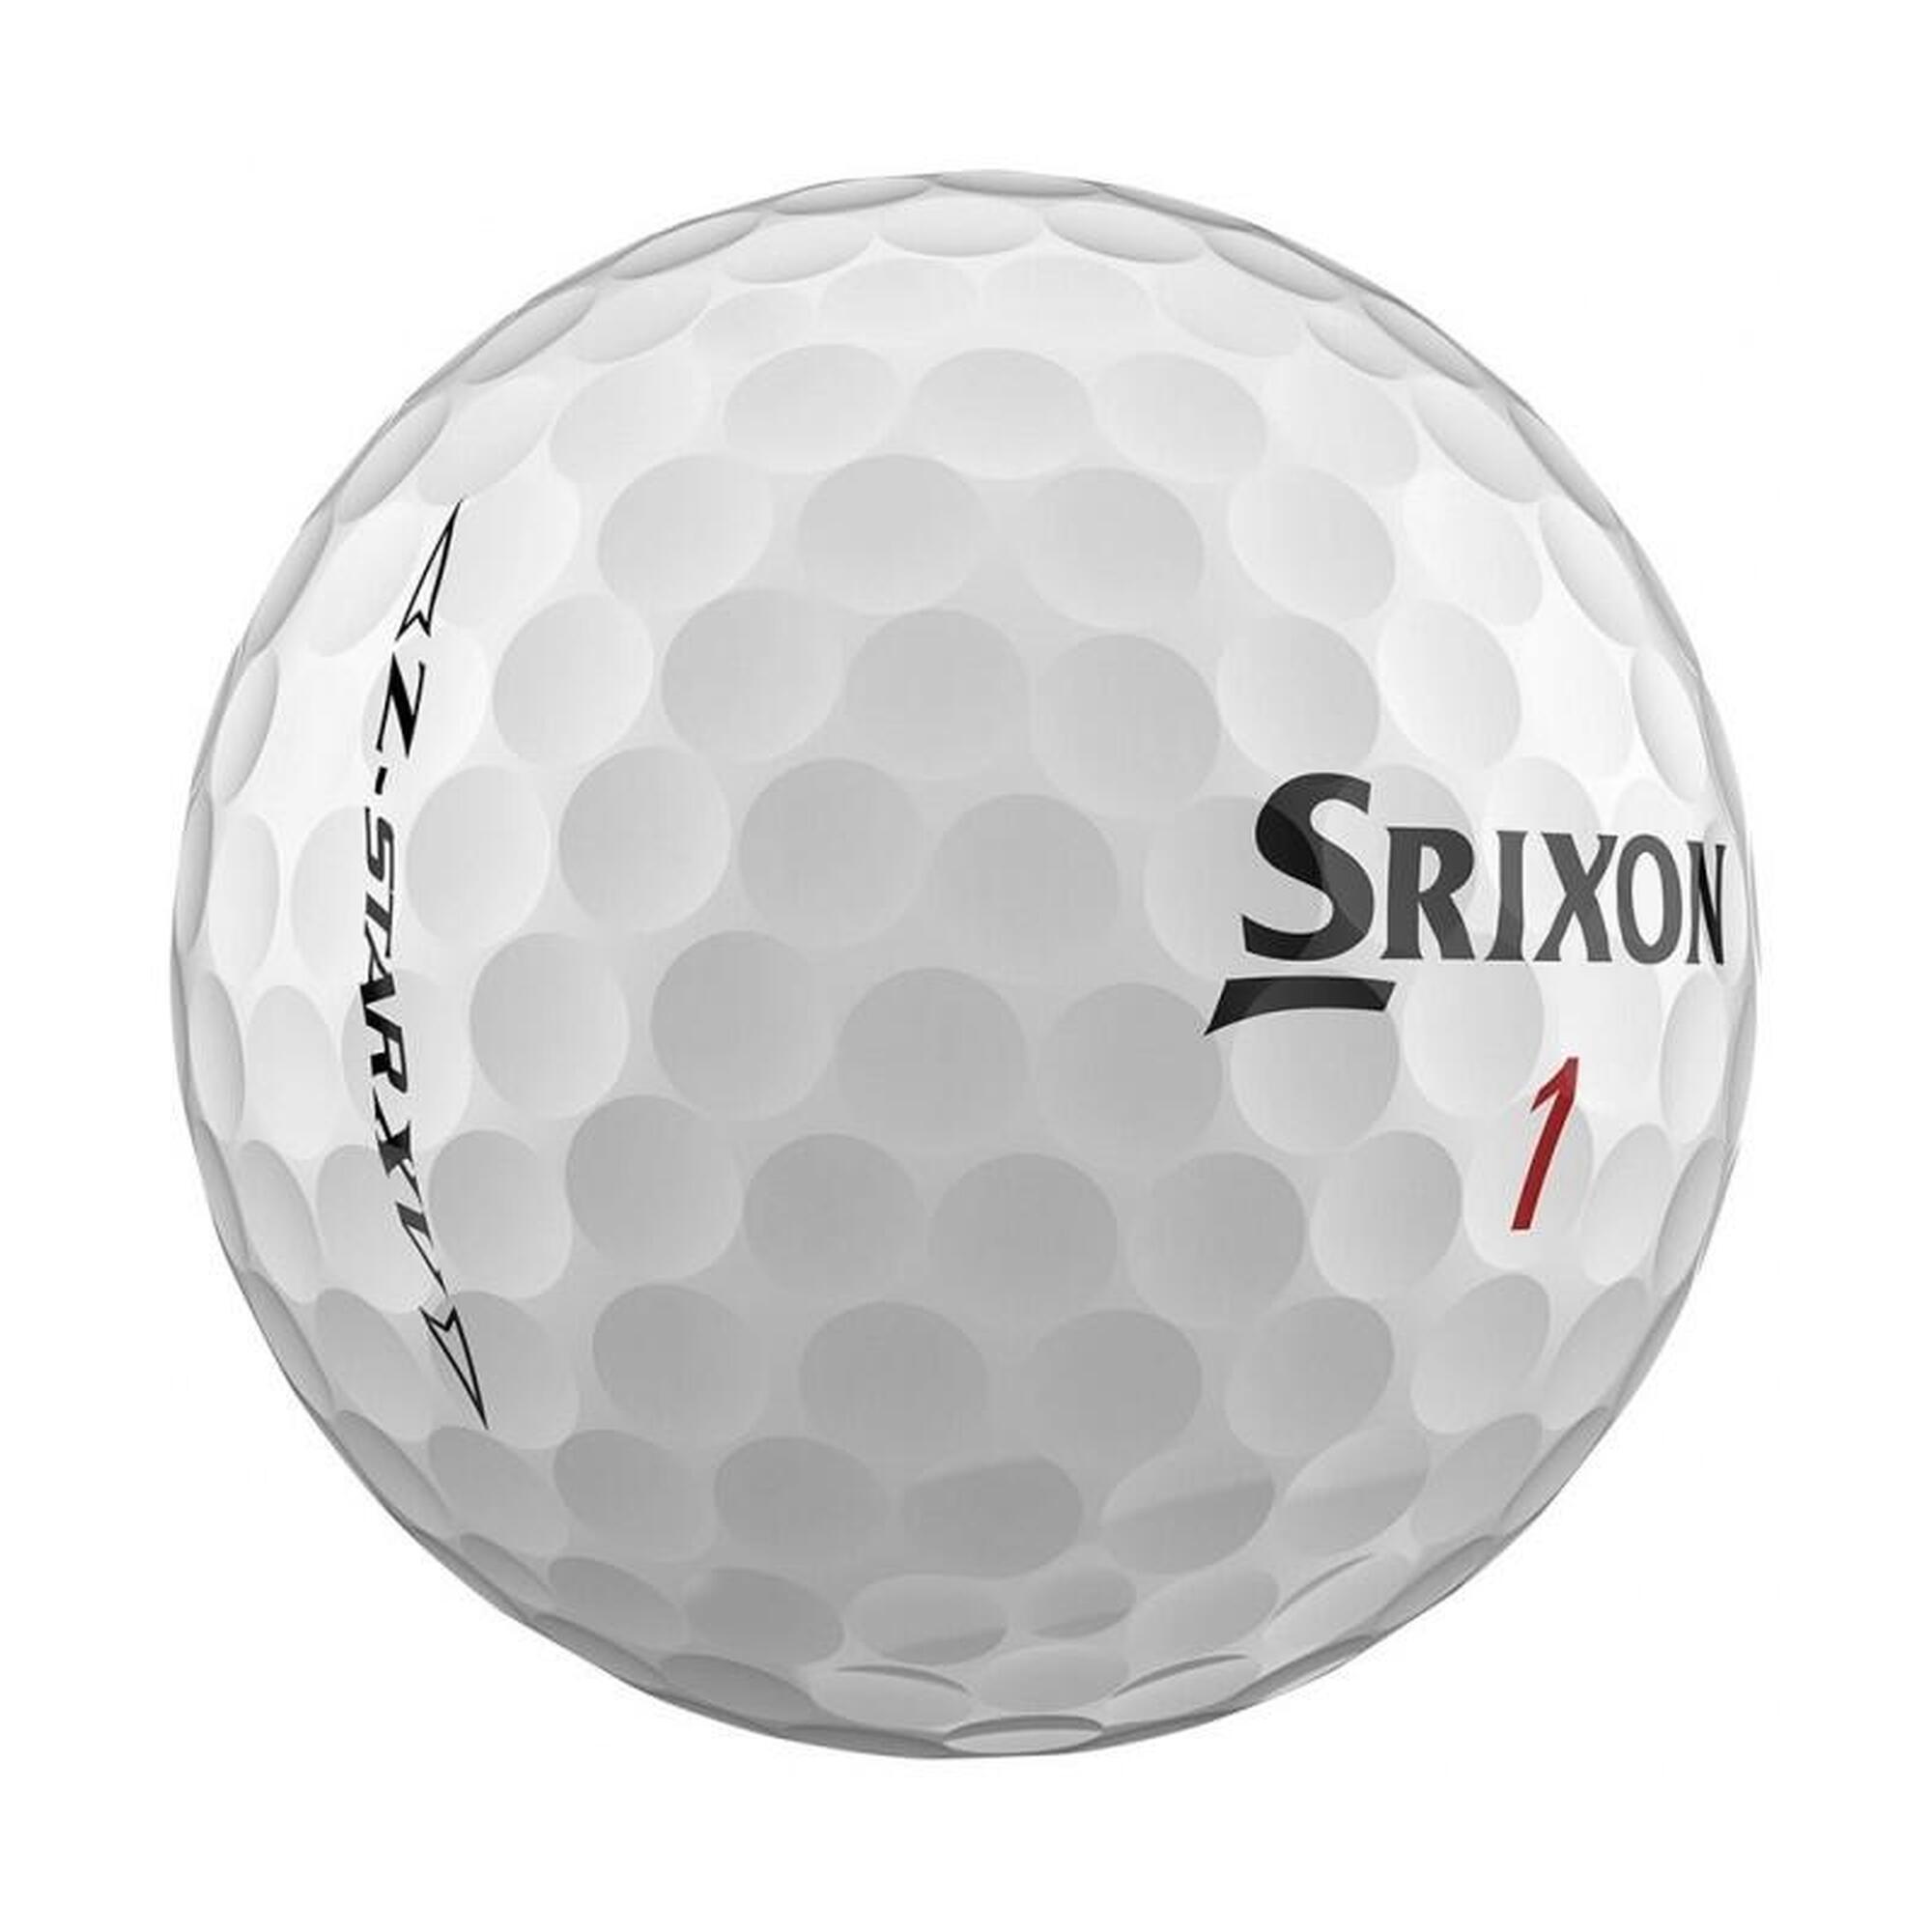 Z-Star XV Bolas de Golfe Srixon New